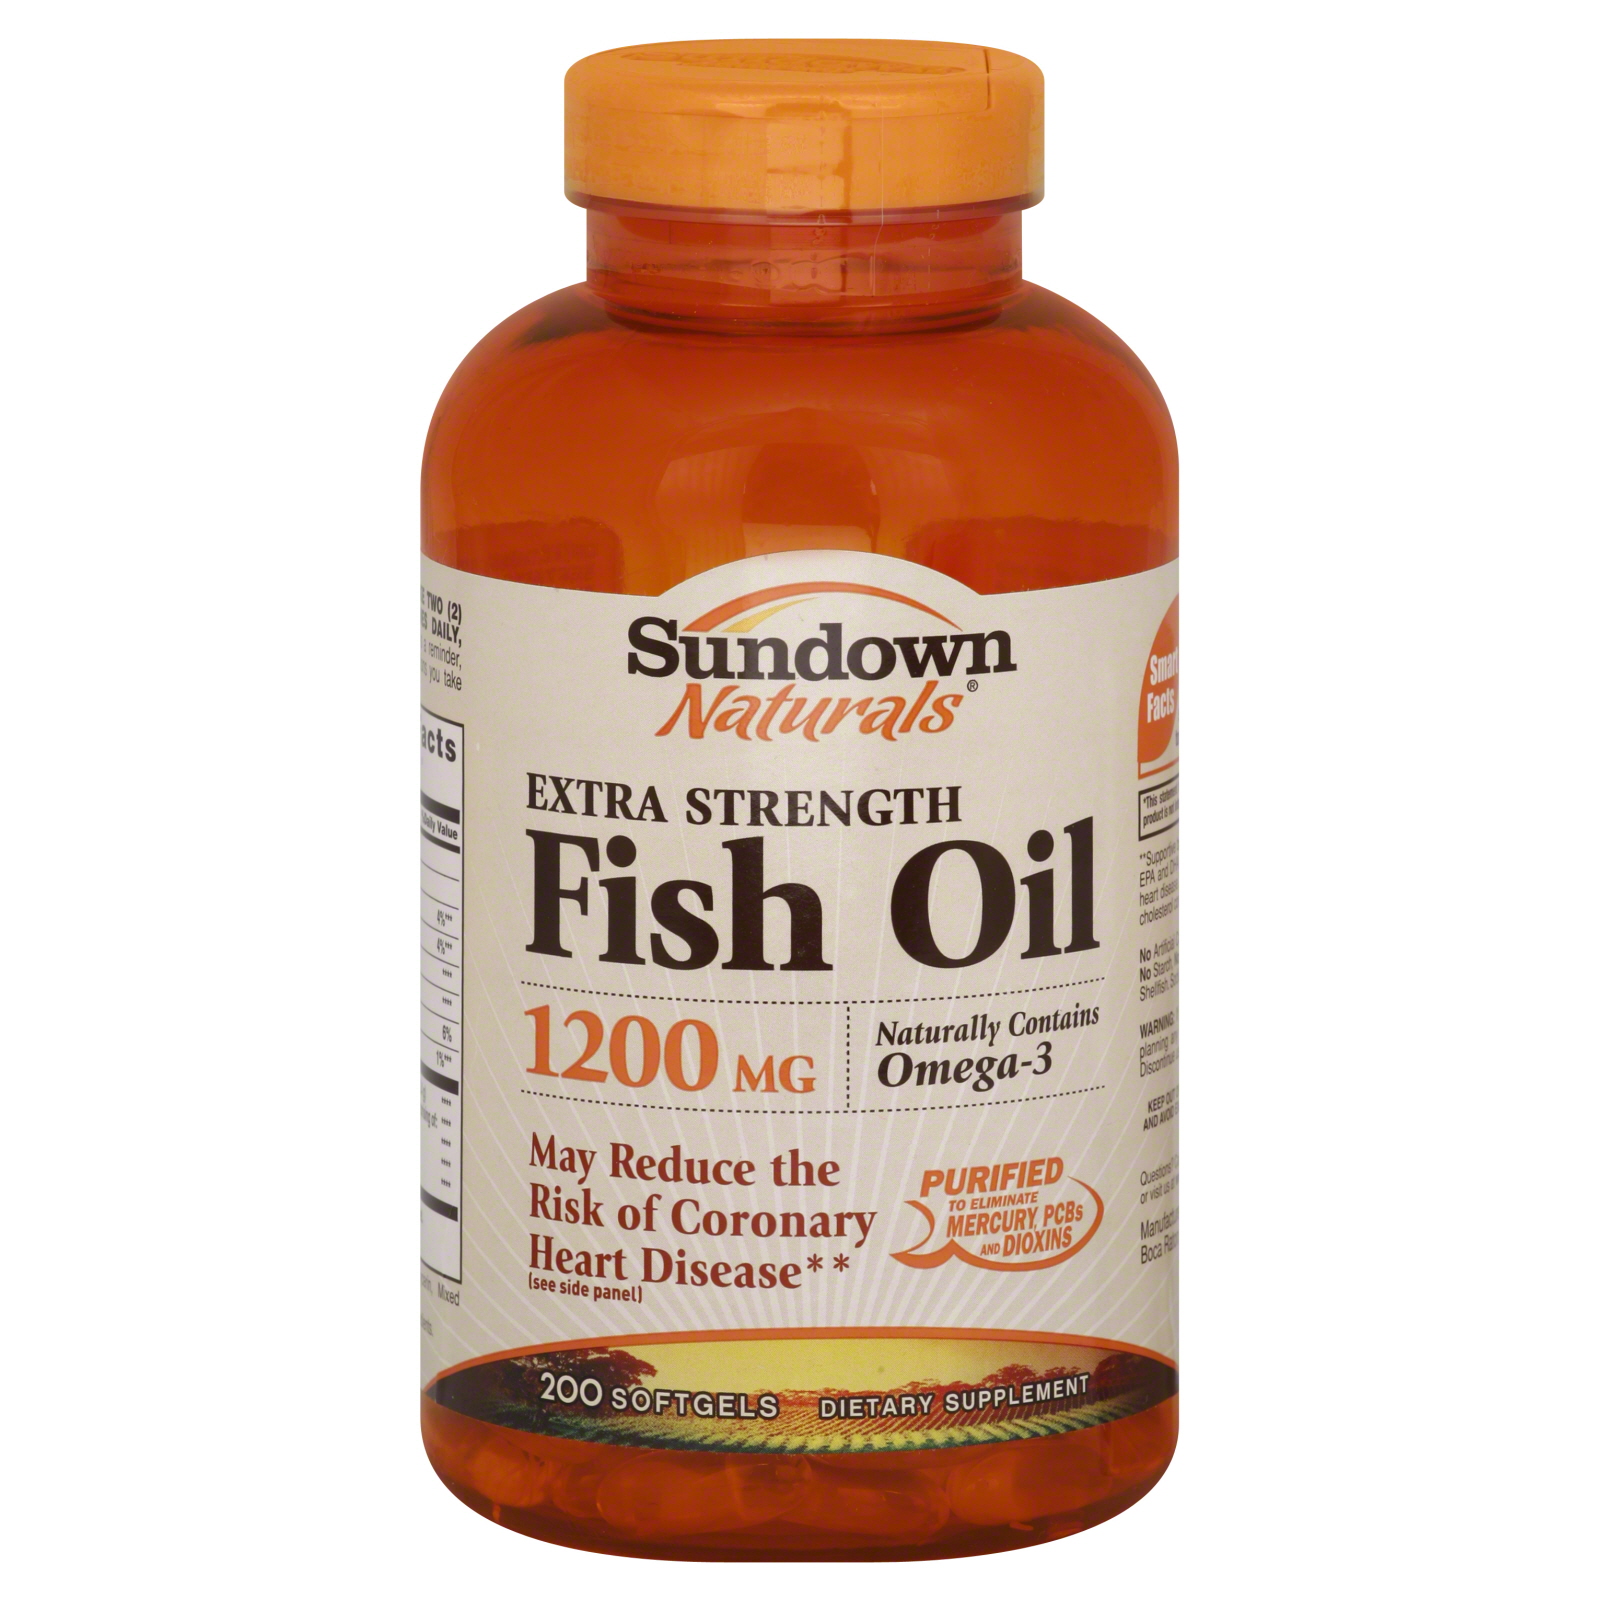 Sundown Naturals Fish Oil, Extra Strength, 1200 mg, Softgels, 200 softgels